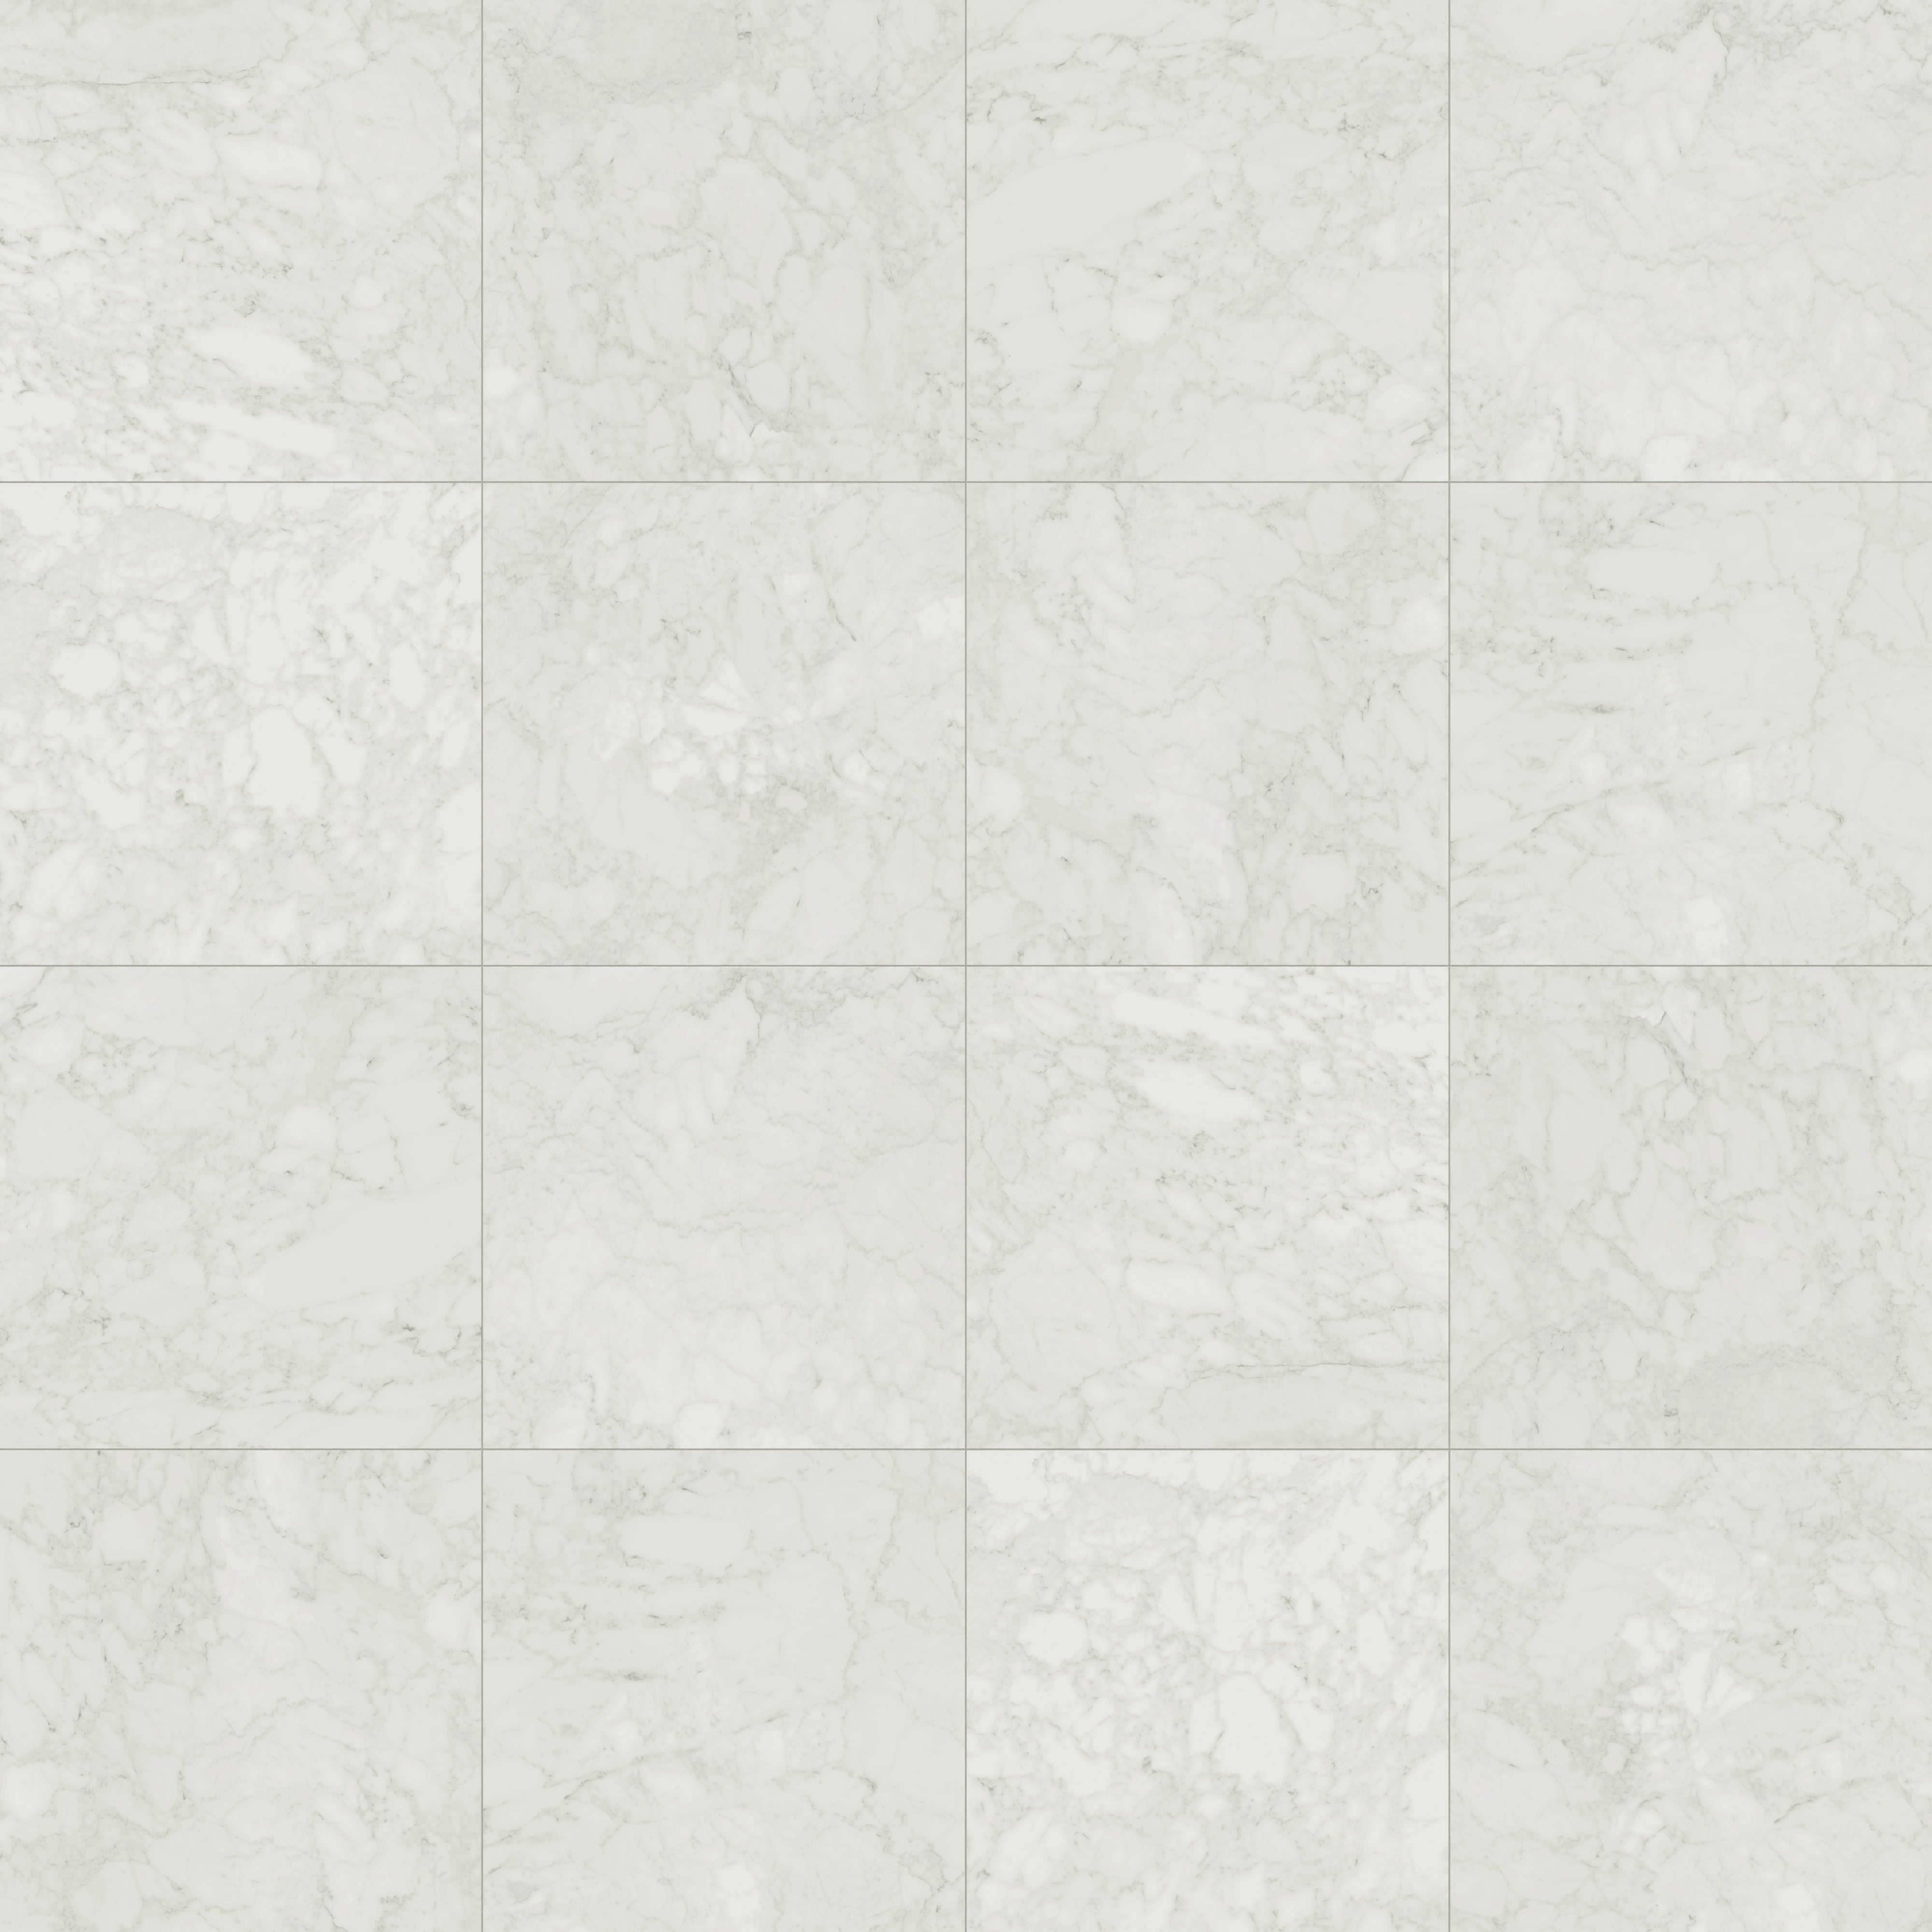 Aniston 48x48 Polished Porcelain Tile in Carrara Bianco